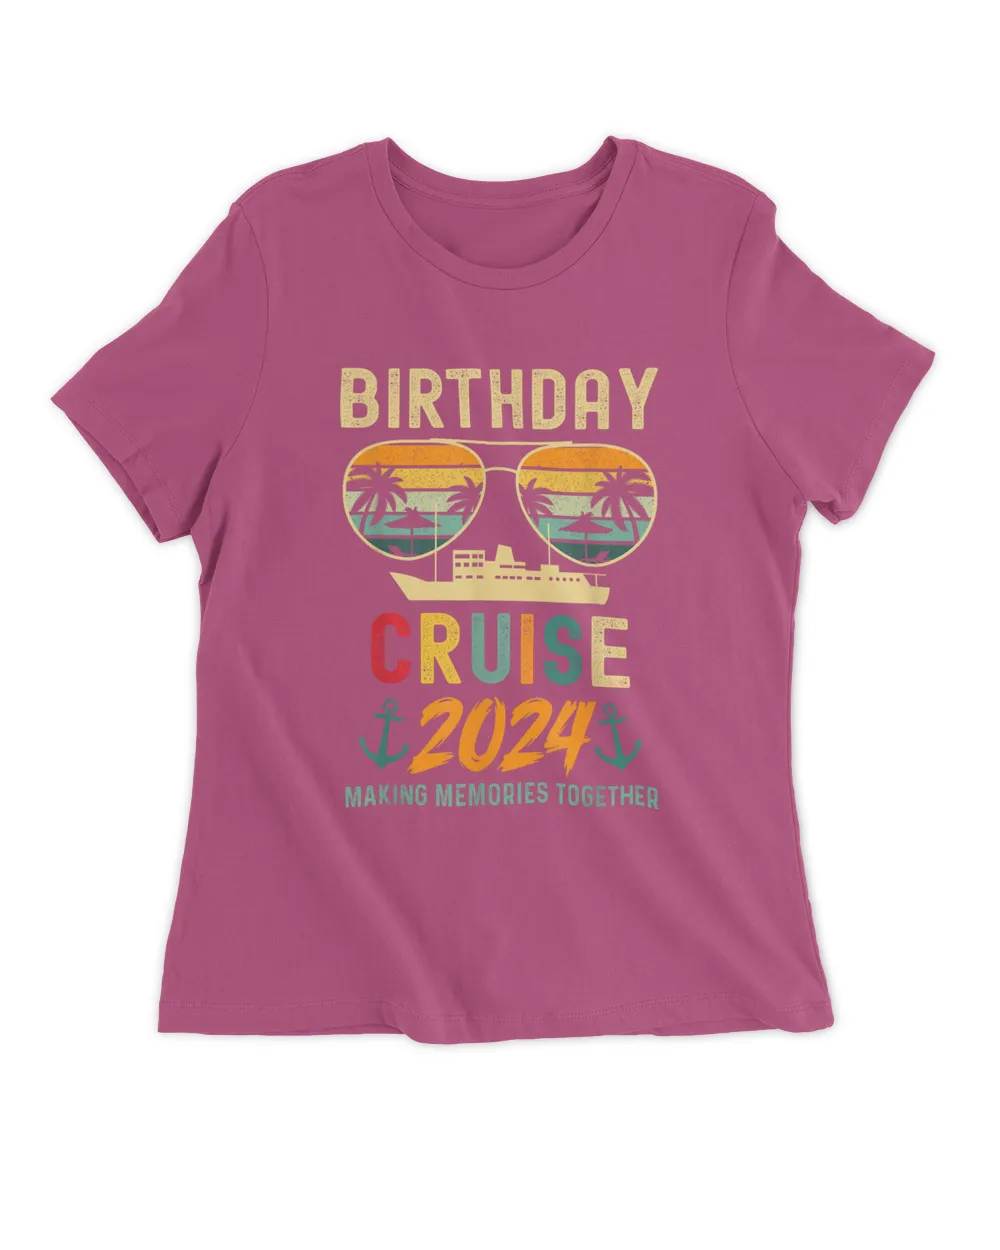 Birthday Cruise Shirts 2024 Squad Family Vacation